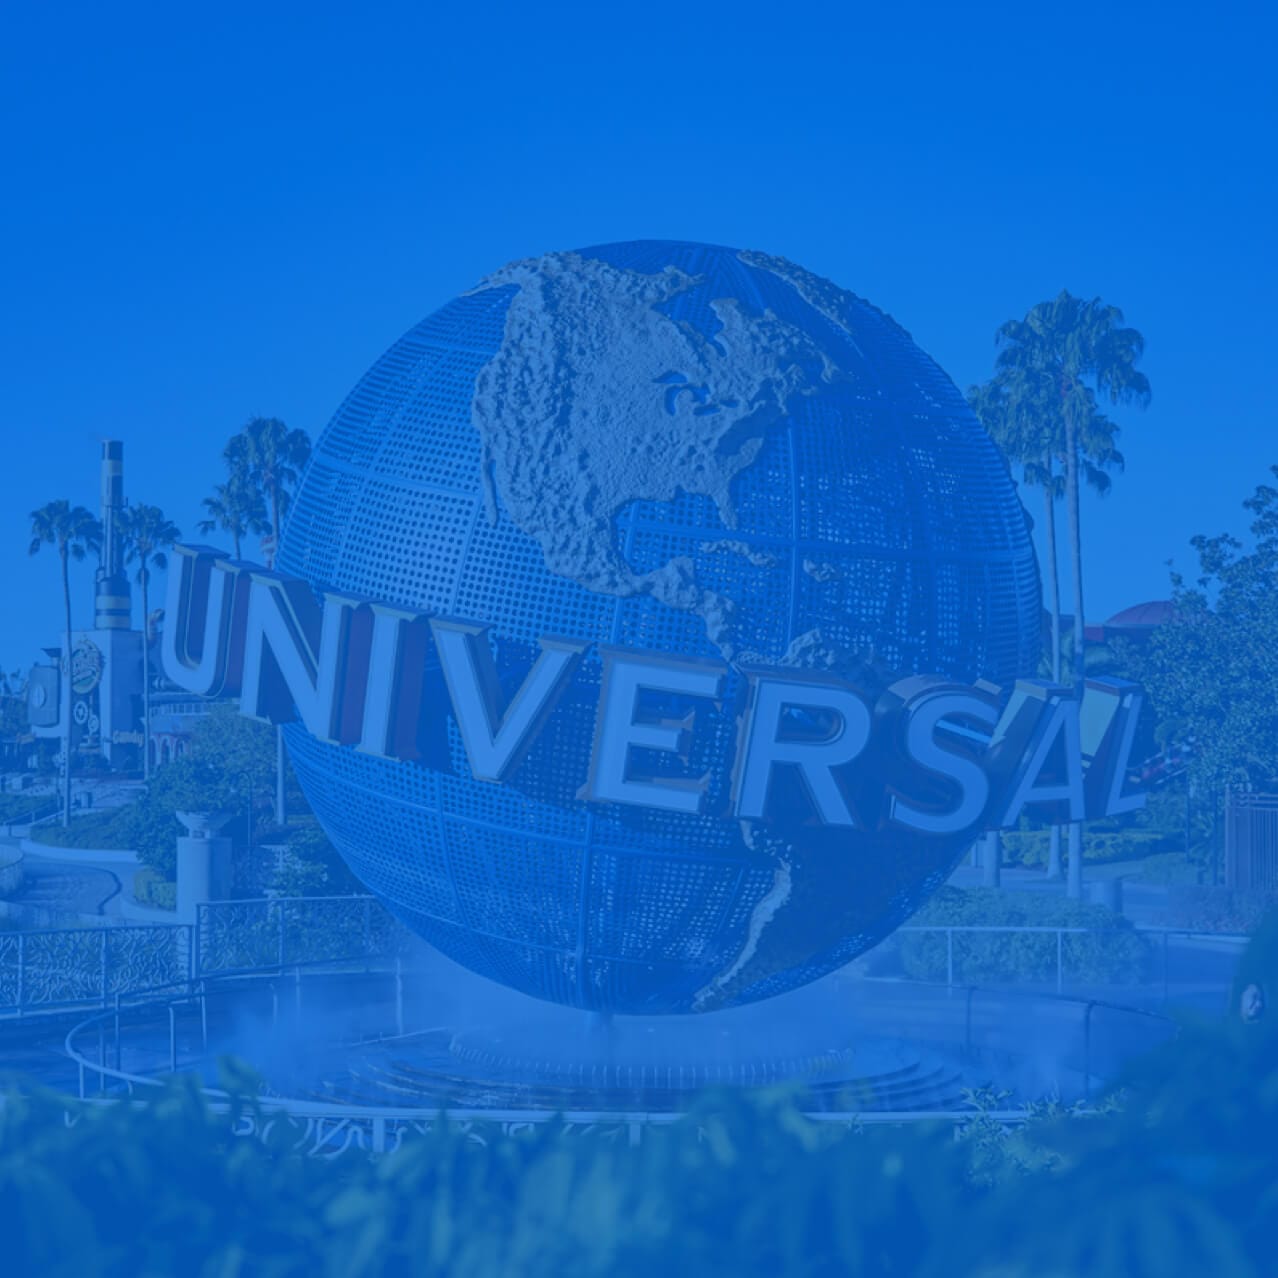 Universal Orlando Resort Parking Information and Address